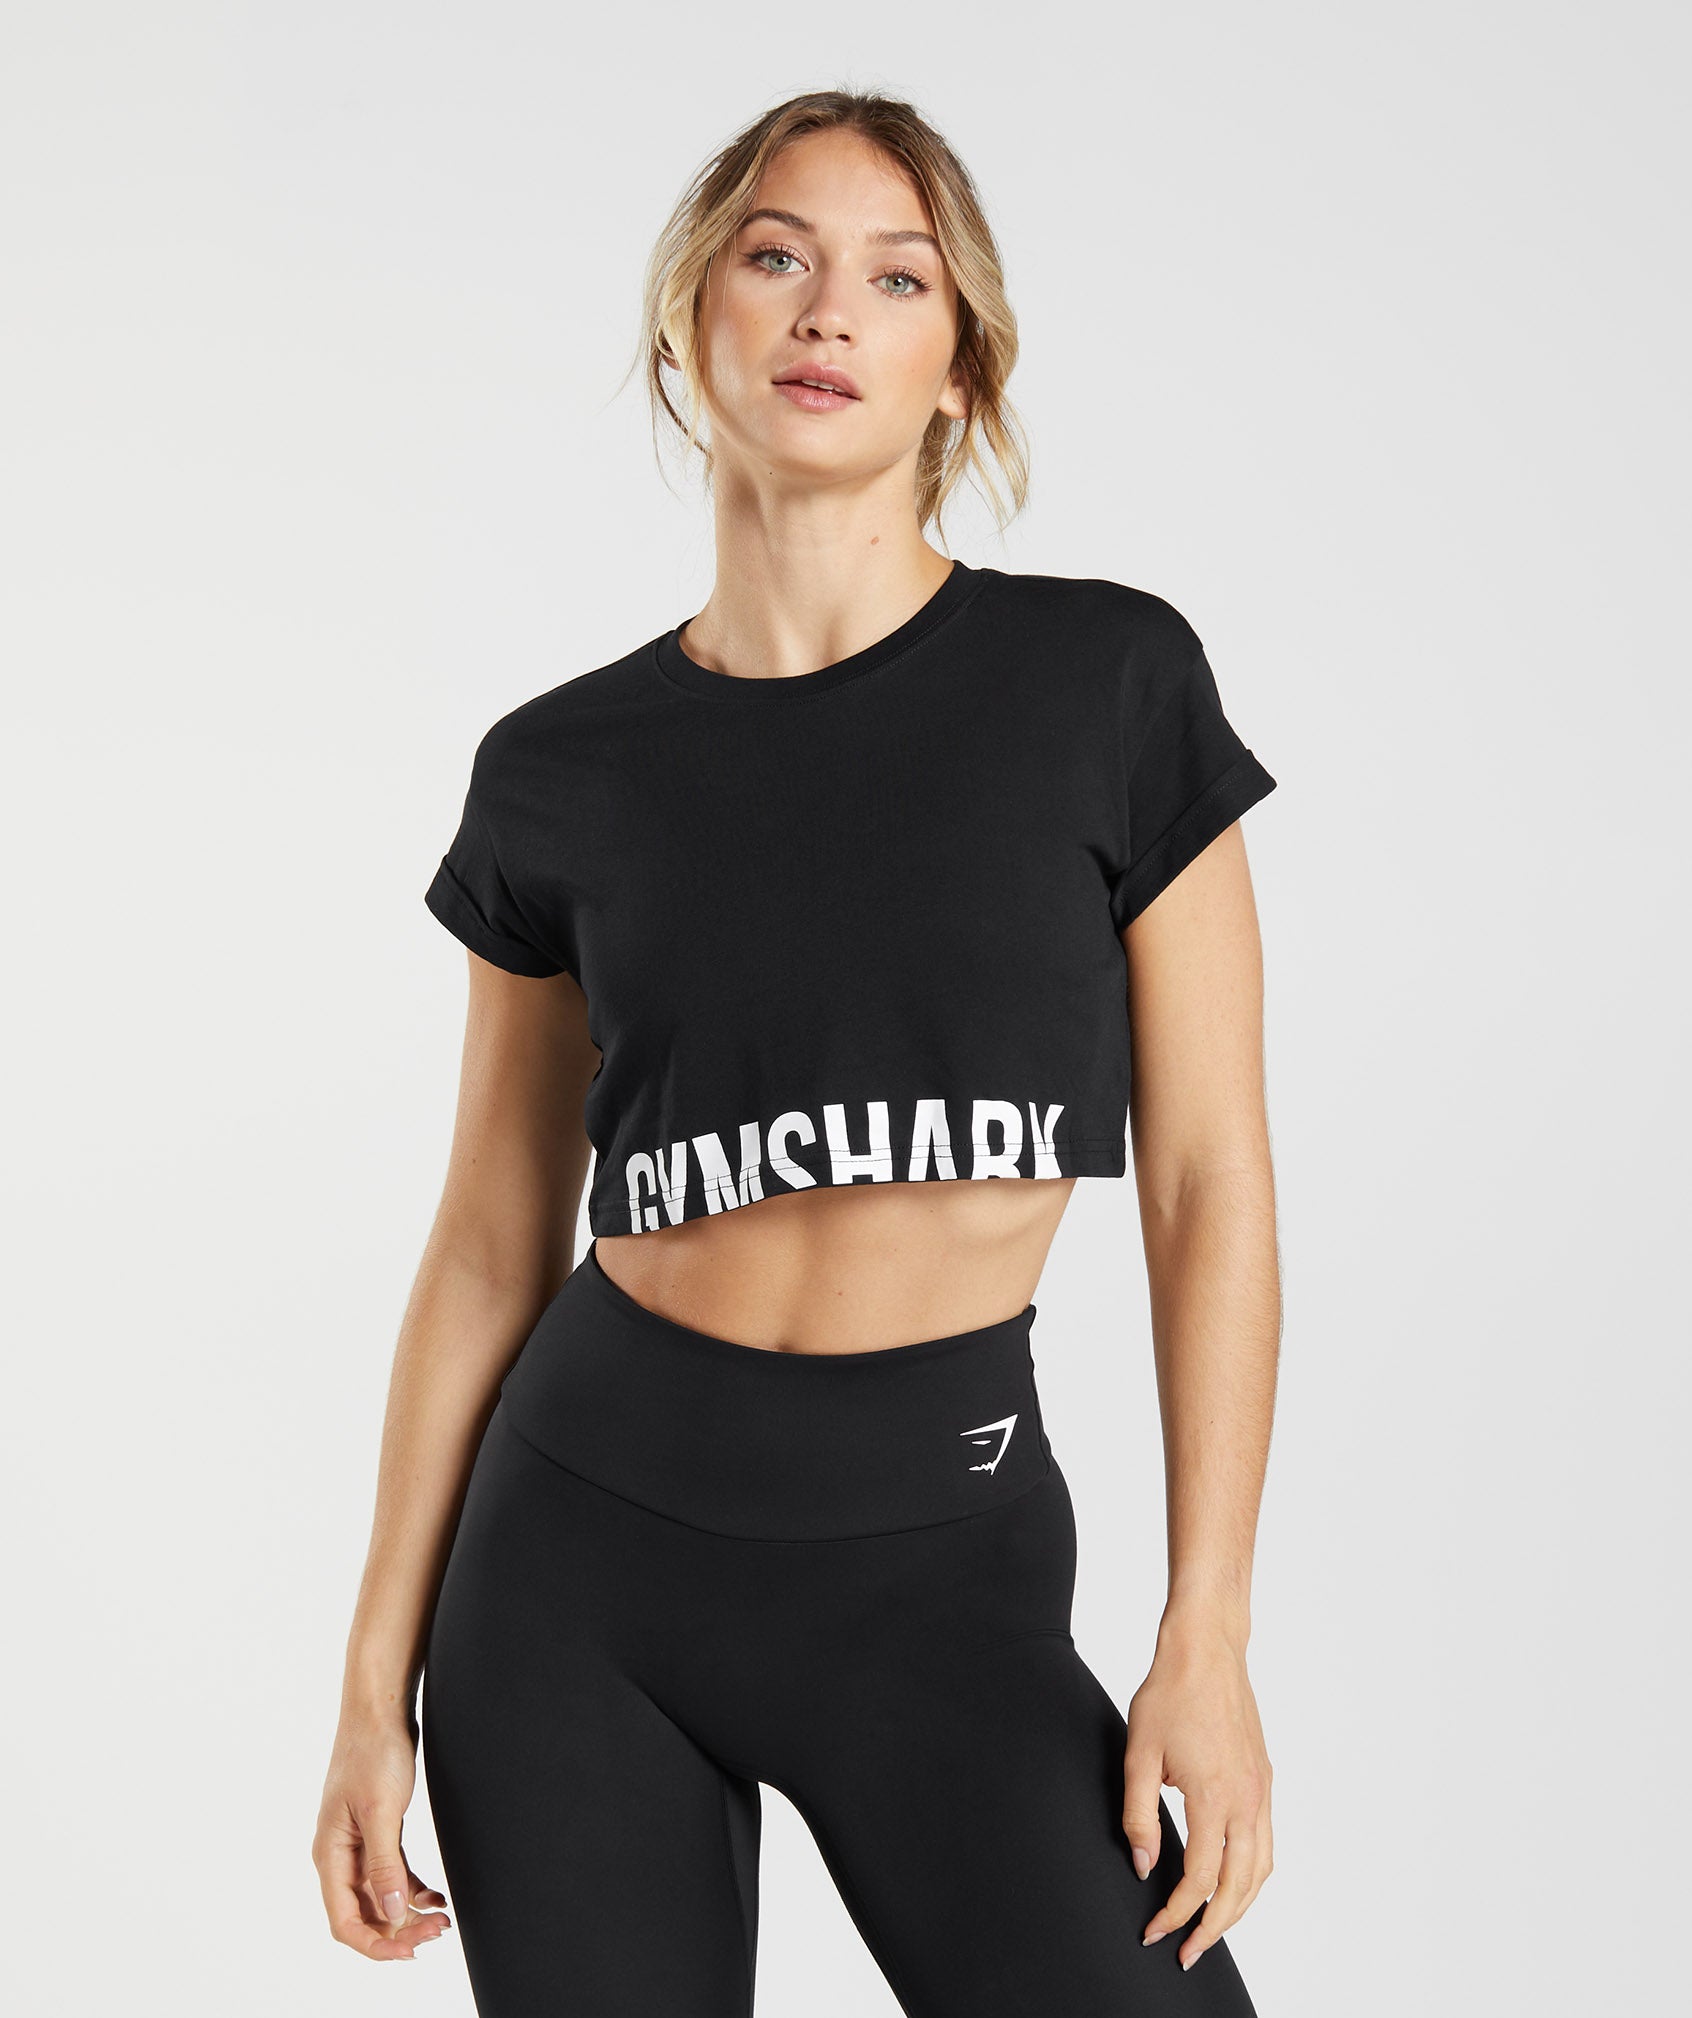 Women's Crop Tops, Workout Cropped Shirts